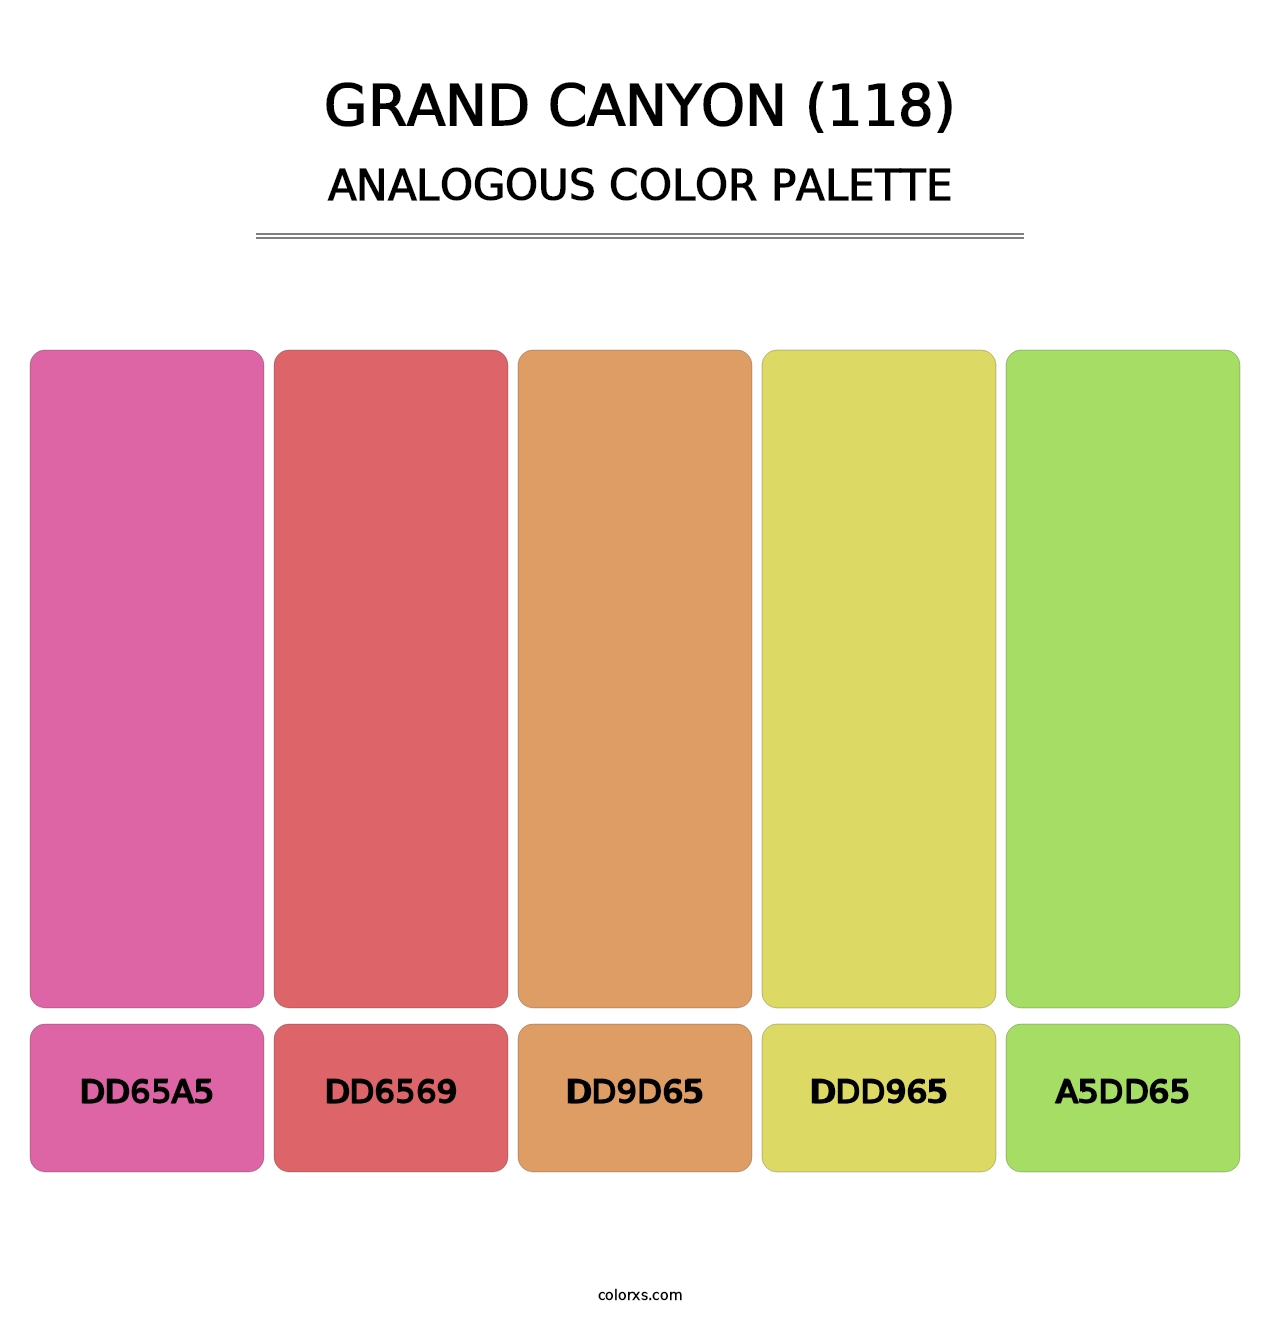 Grand Canyon (118) - Analogous Color Palette